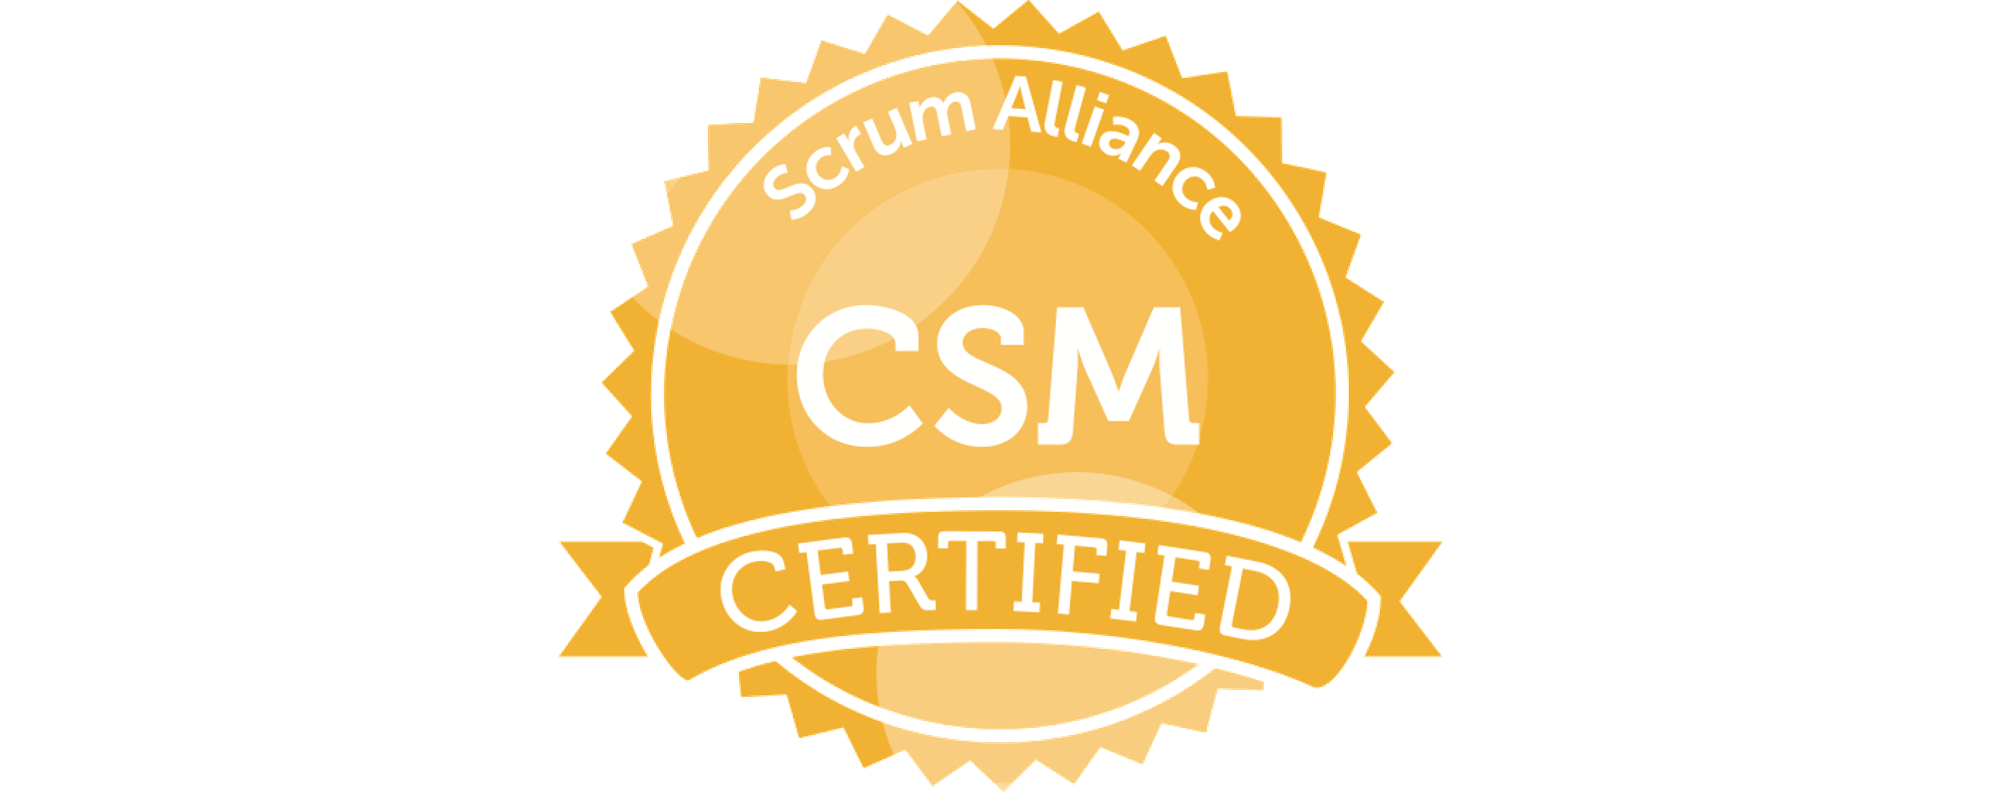 Certified Scrum Master Workshop CSM Vidscola